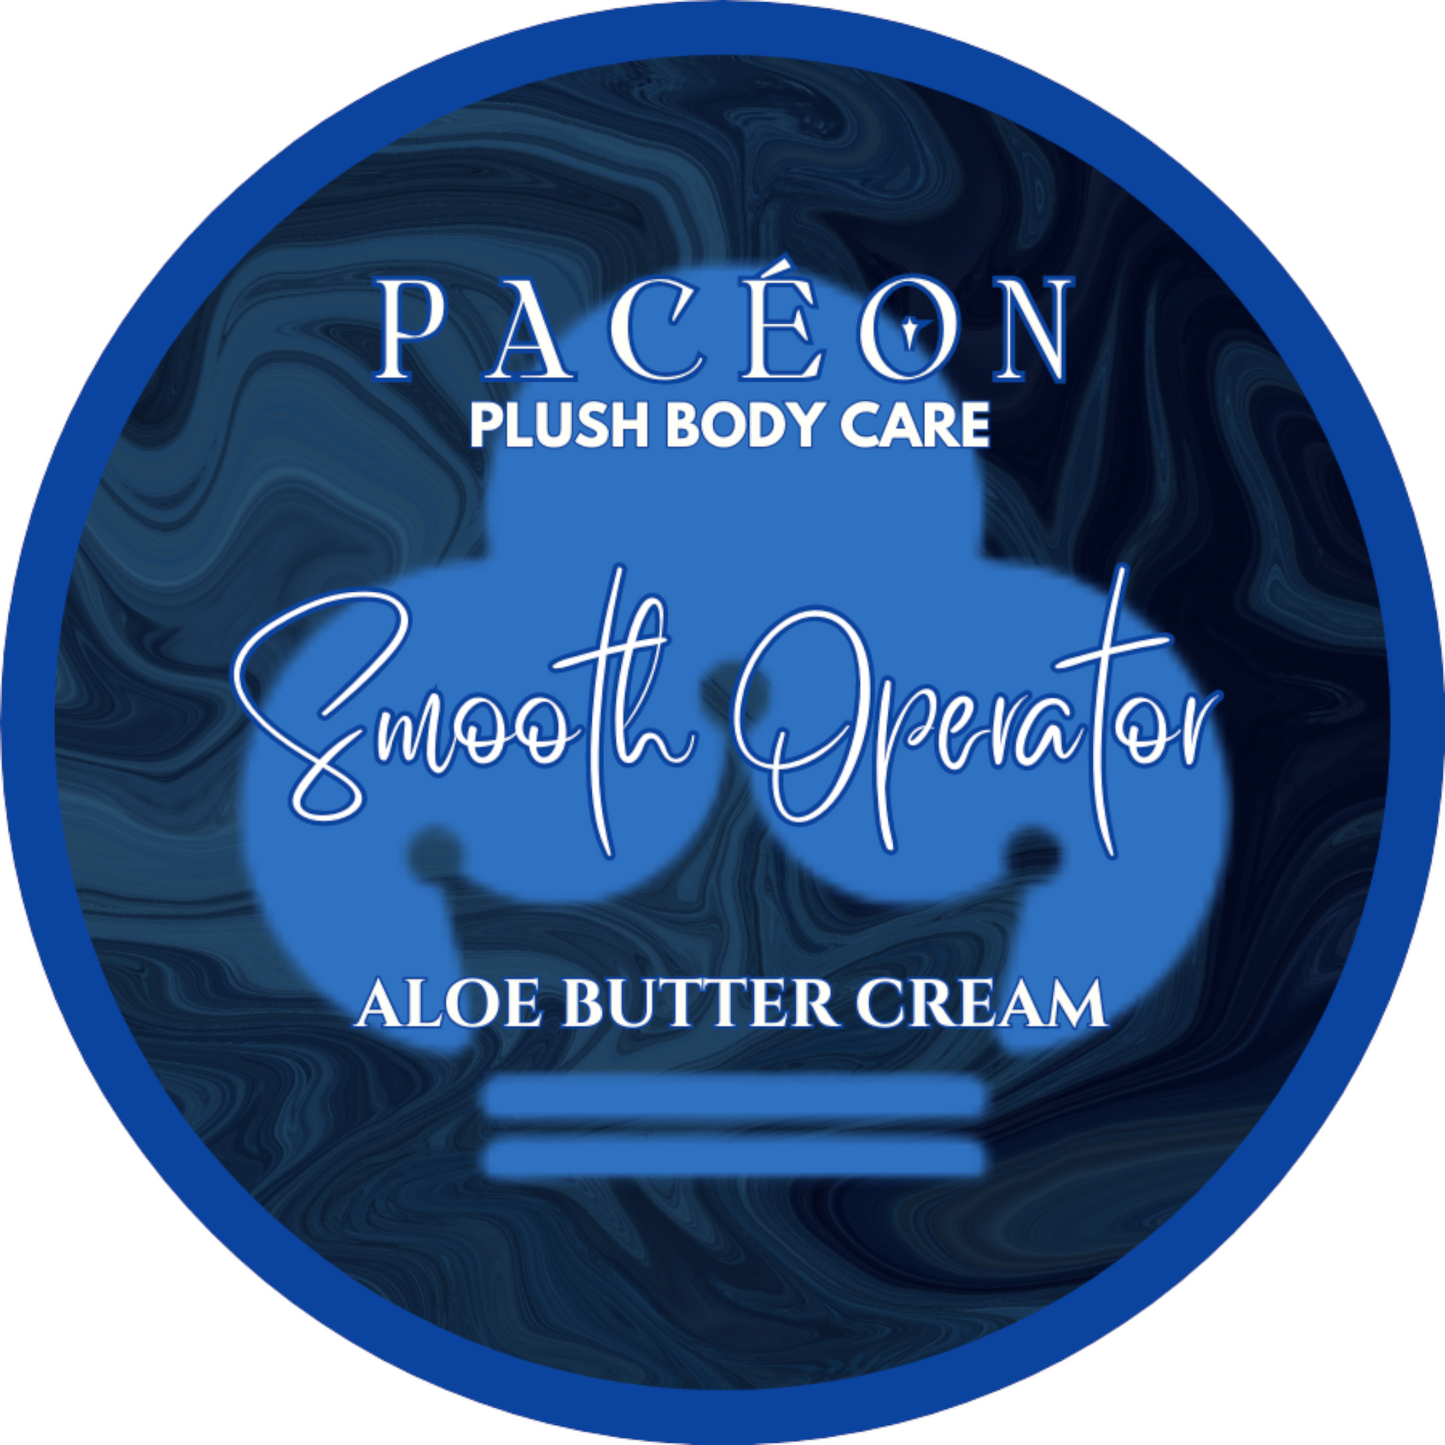 Aloe Butter Cream